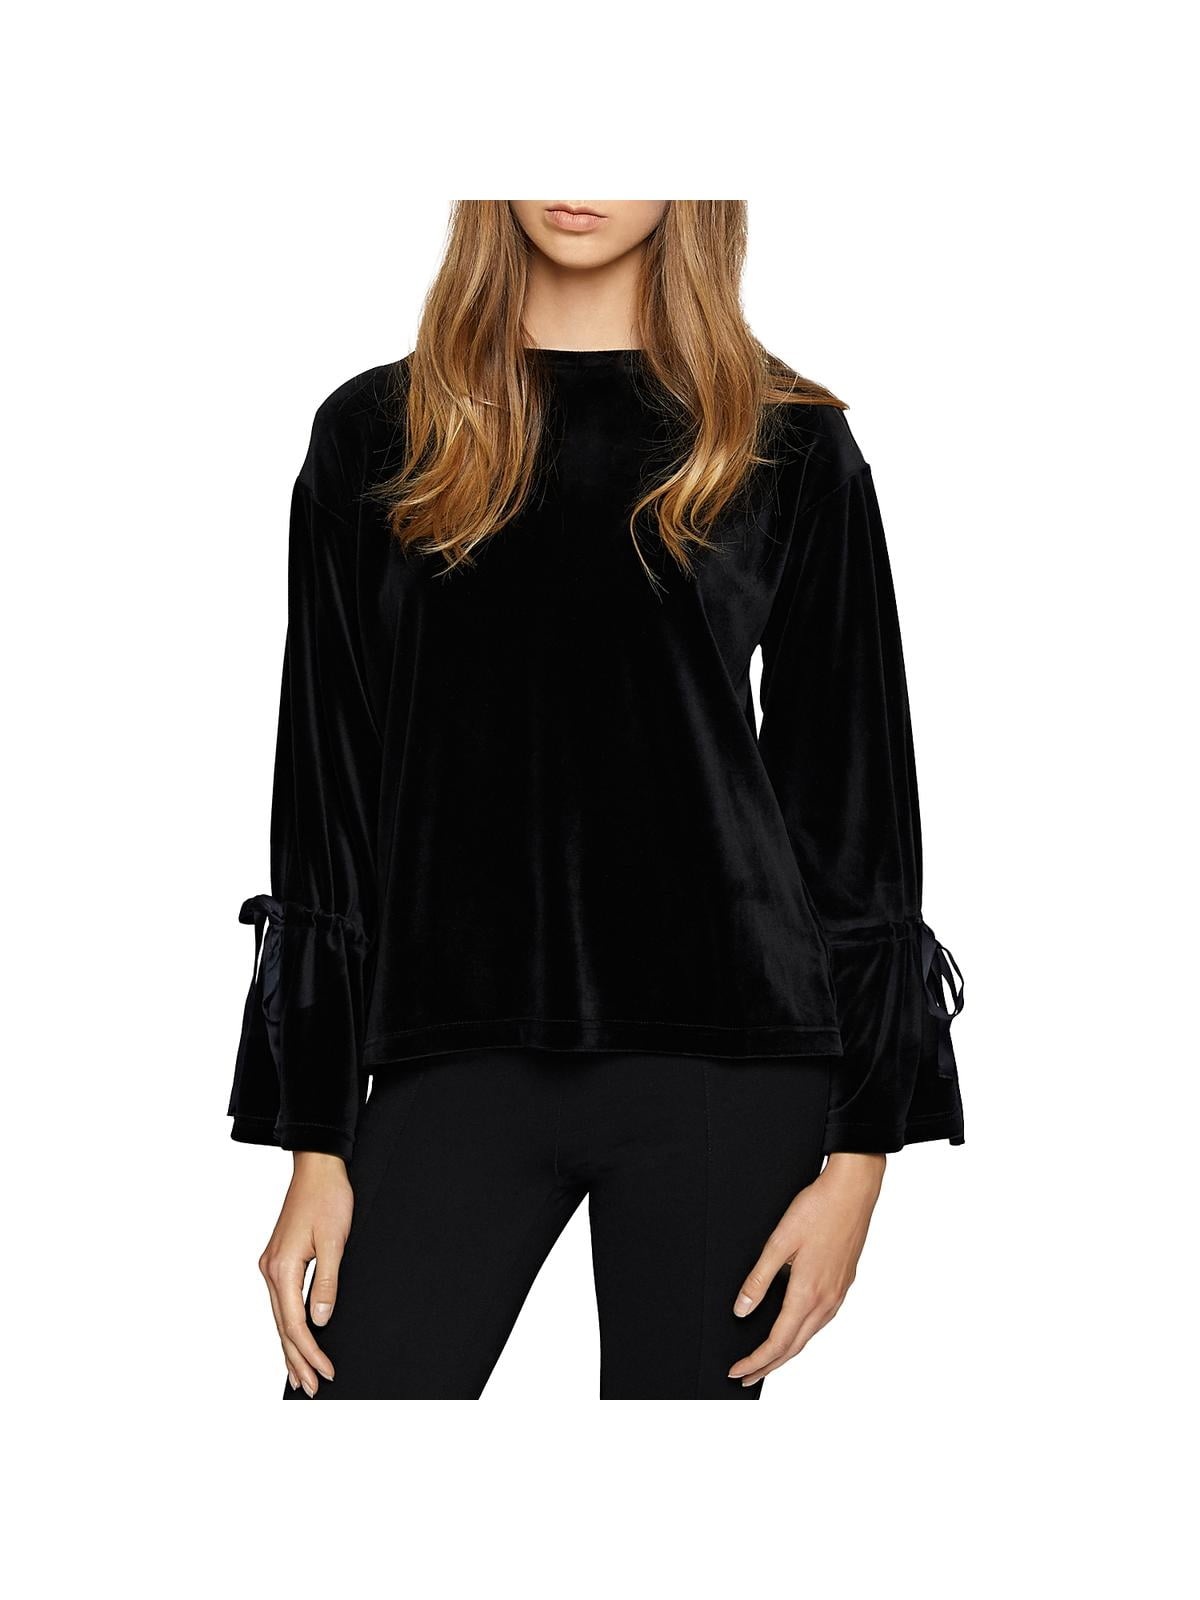 Matty M Women's Crushed Velour Top Shirt Blouse Long Sleeve Black Steel S M L 